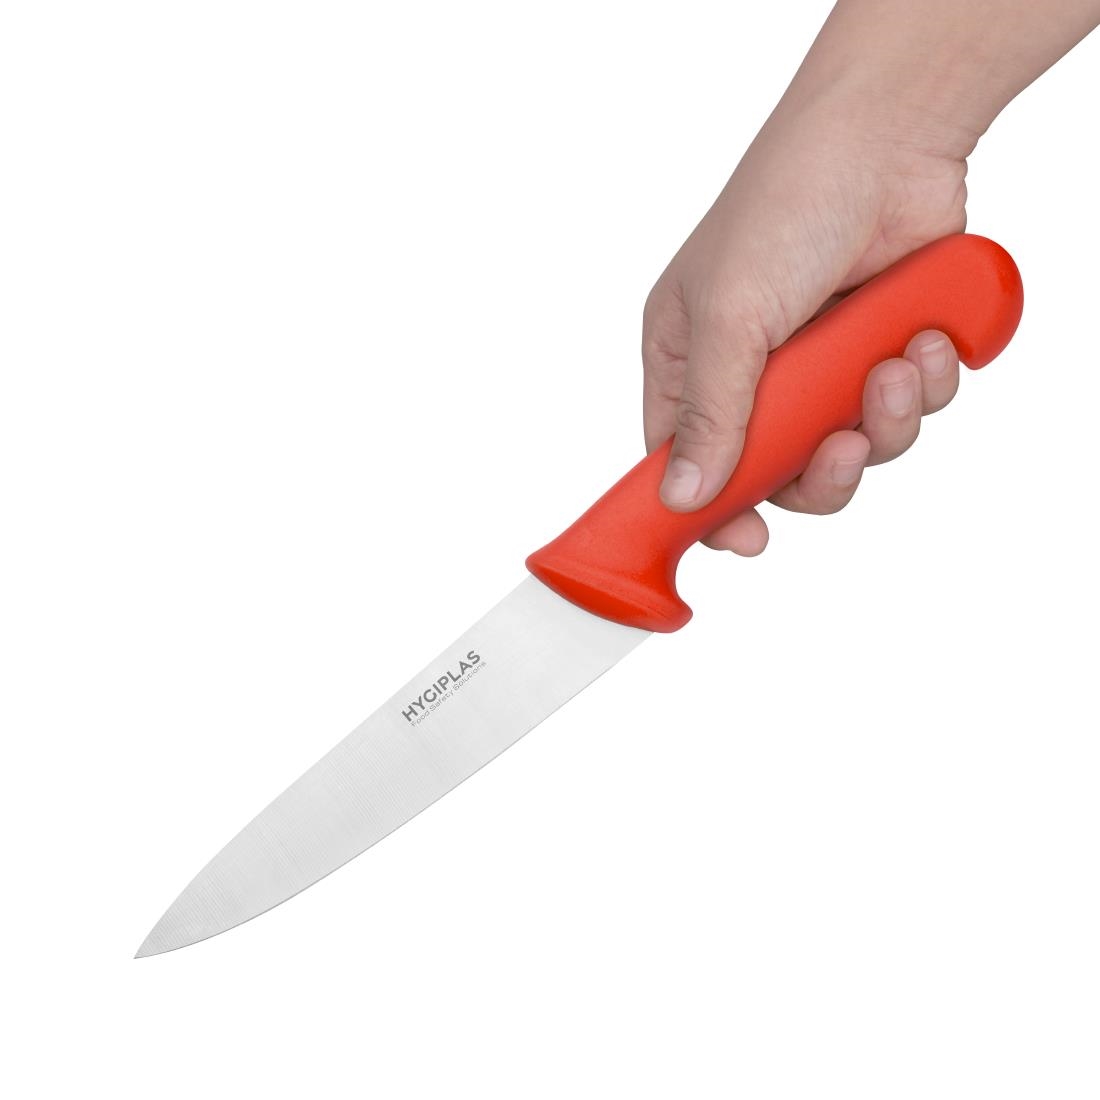 Hygiplas Chefs Knife Red 16cm (C887)